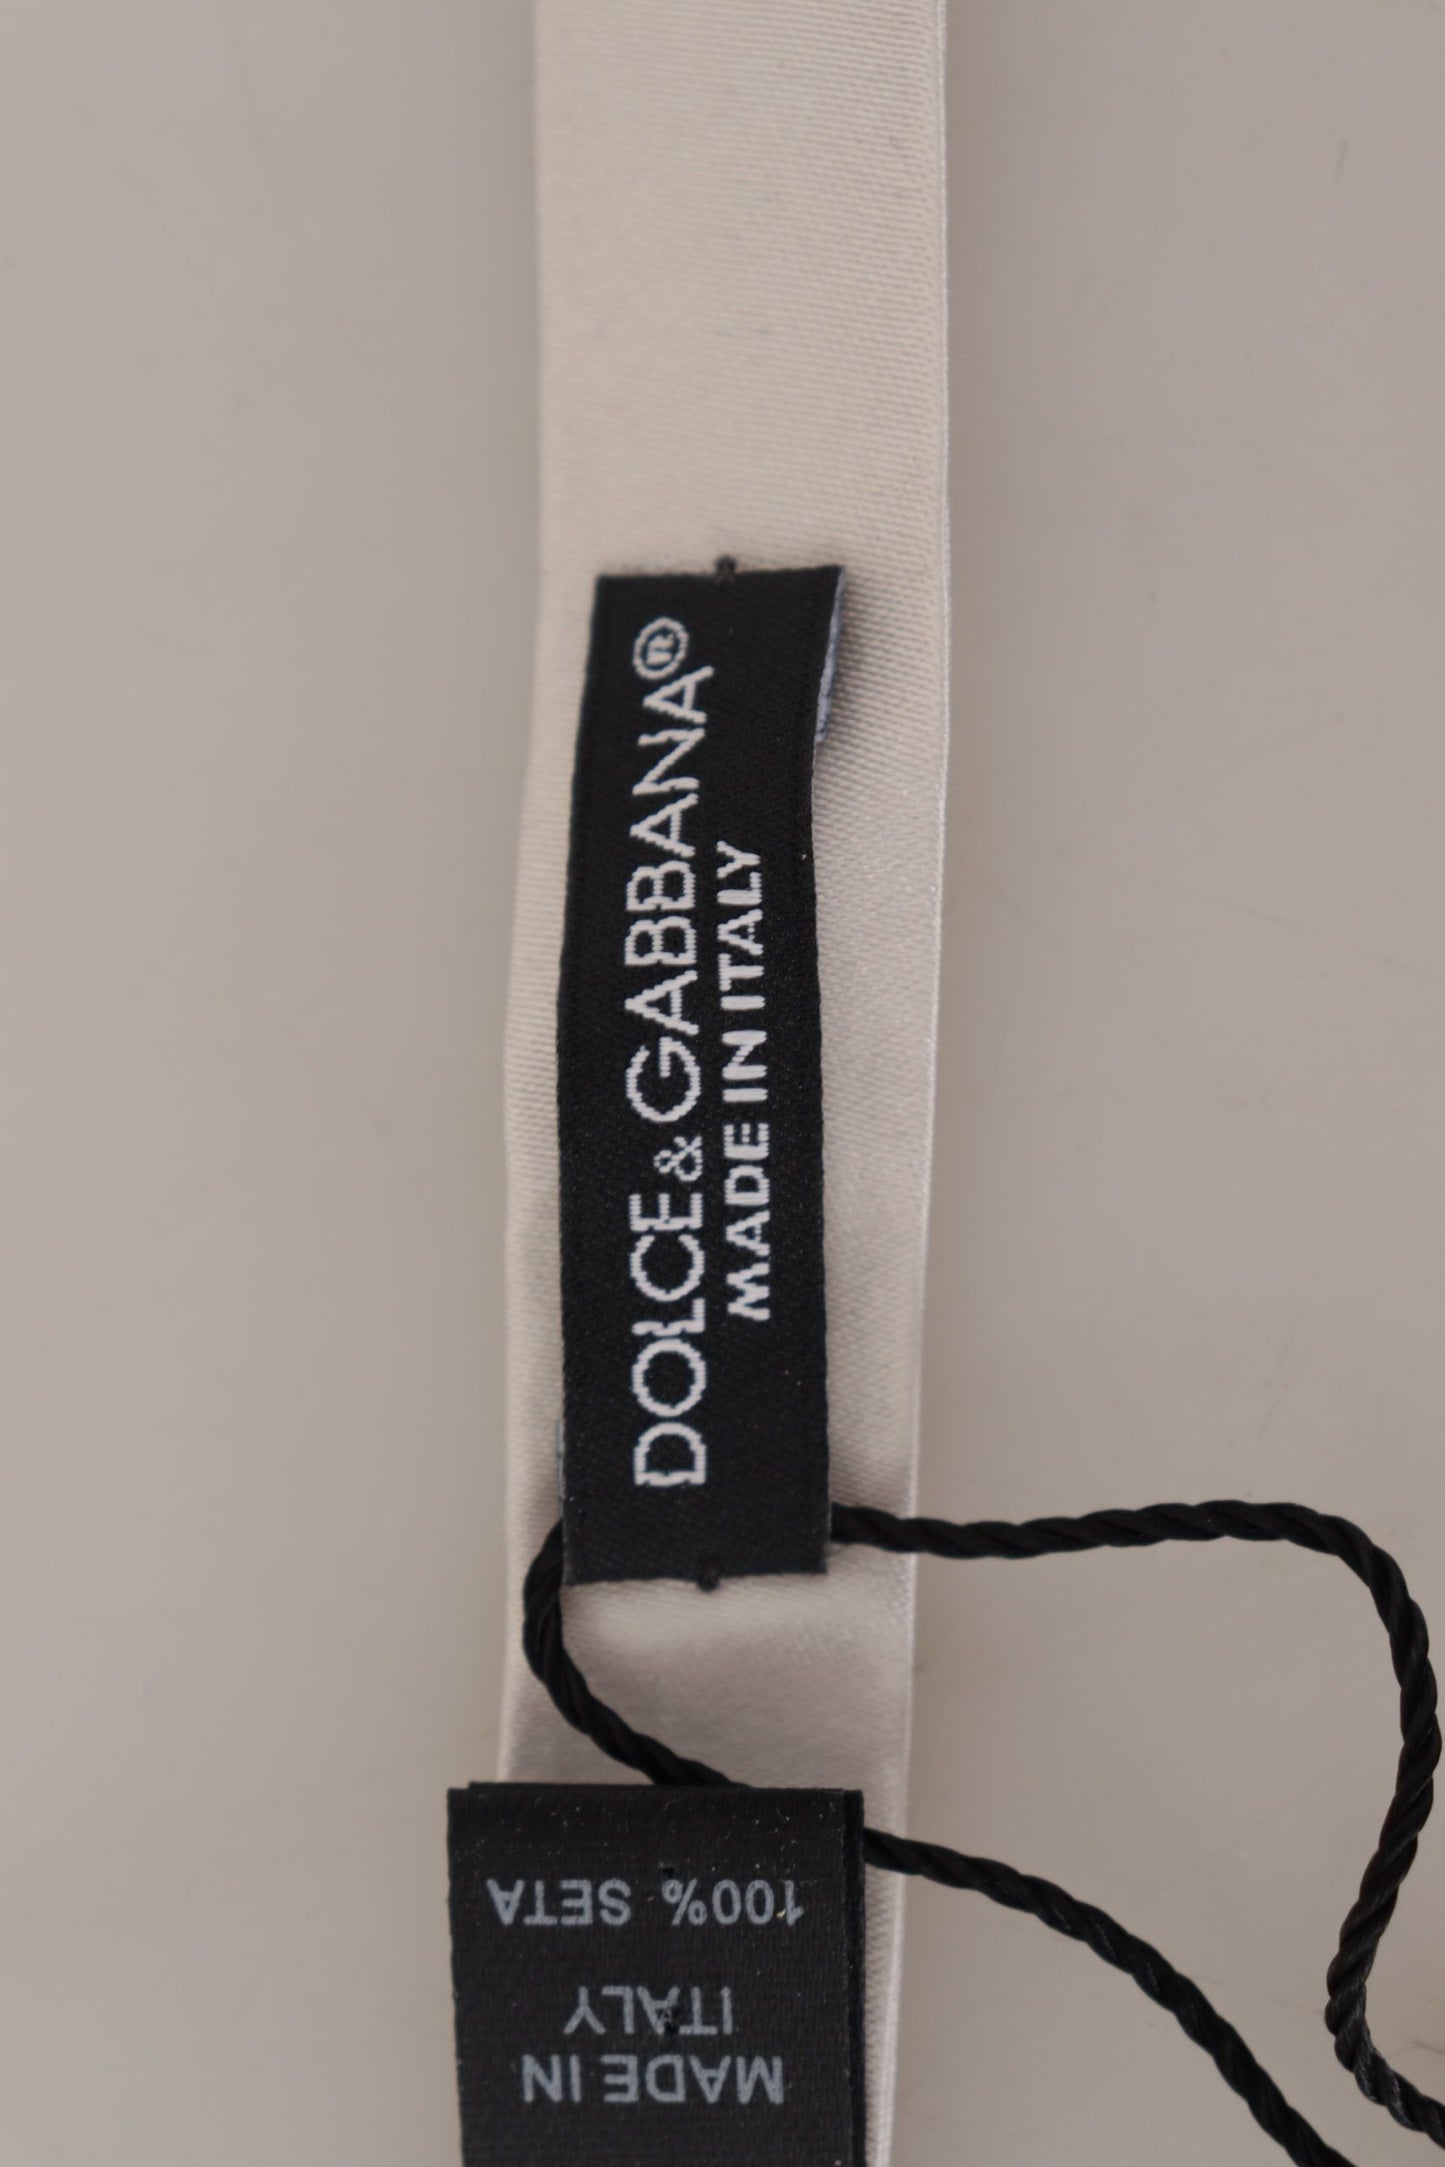 Dolce & Gabbana Gray 100% Silk Adjustable Neck Papillon Tie